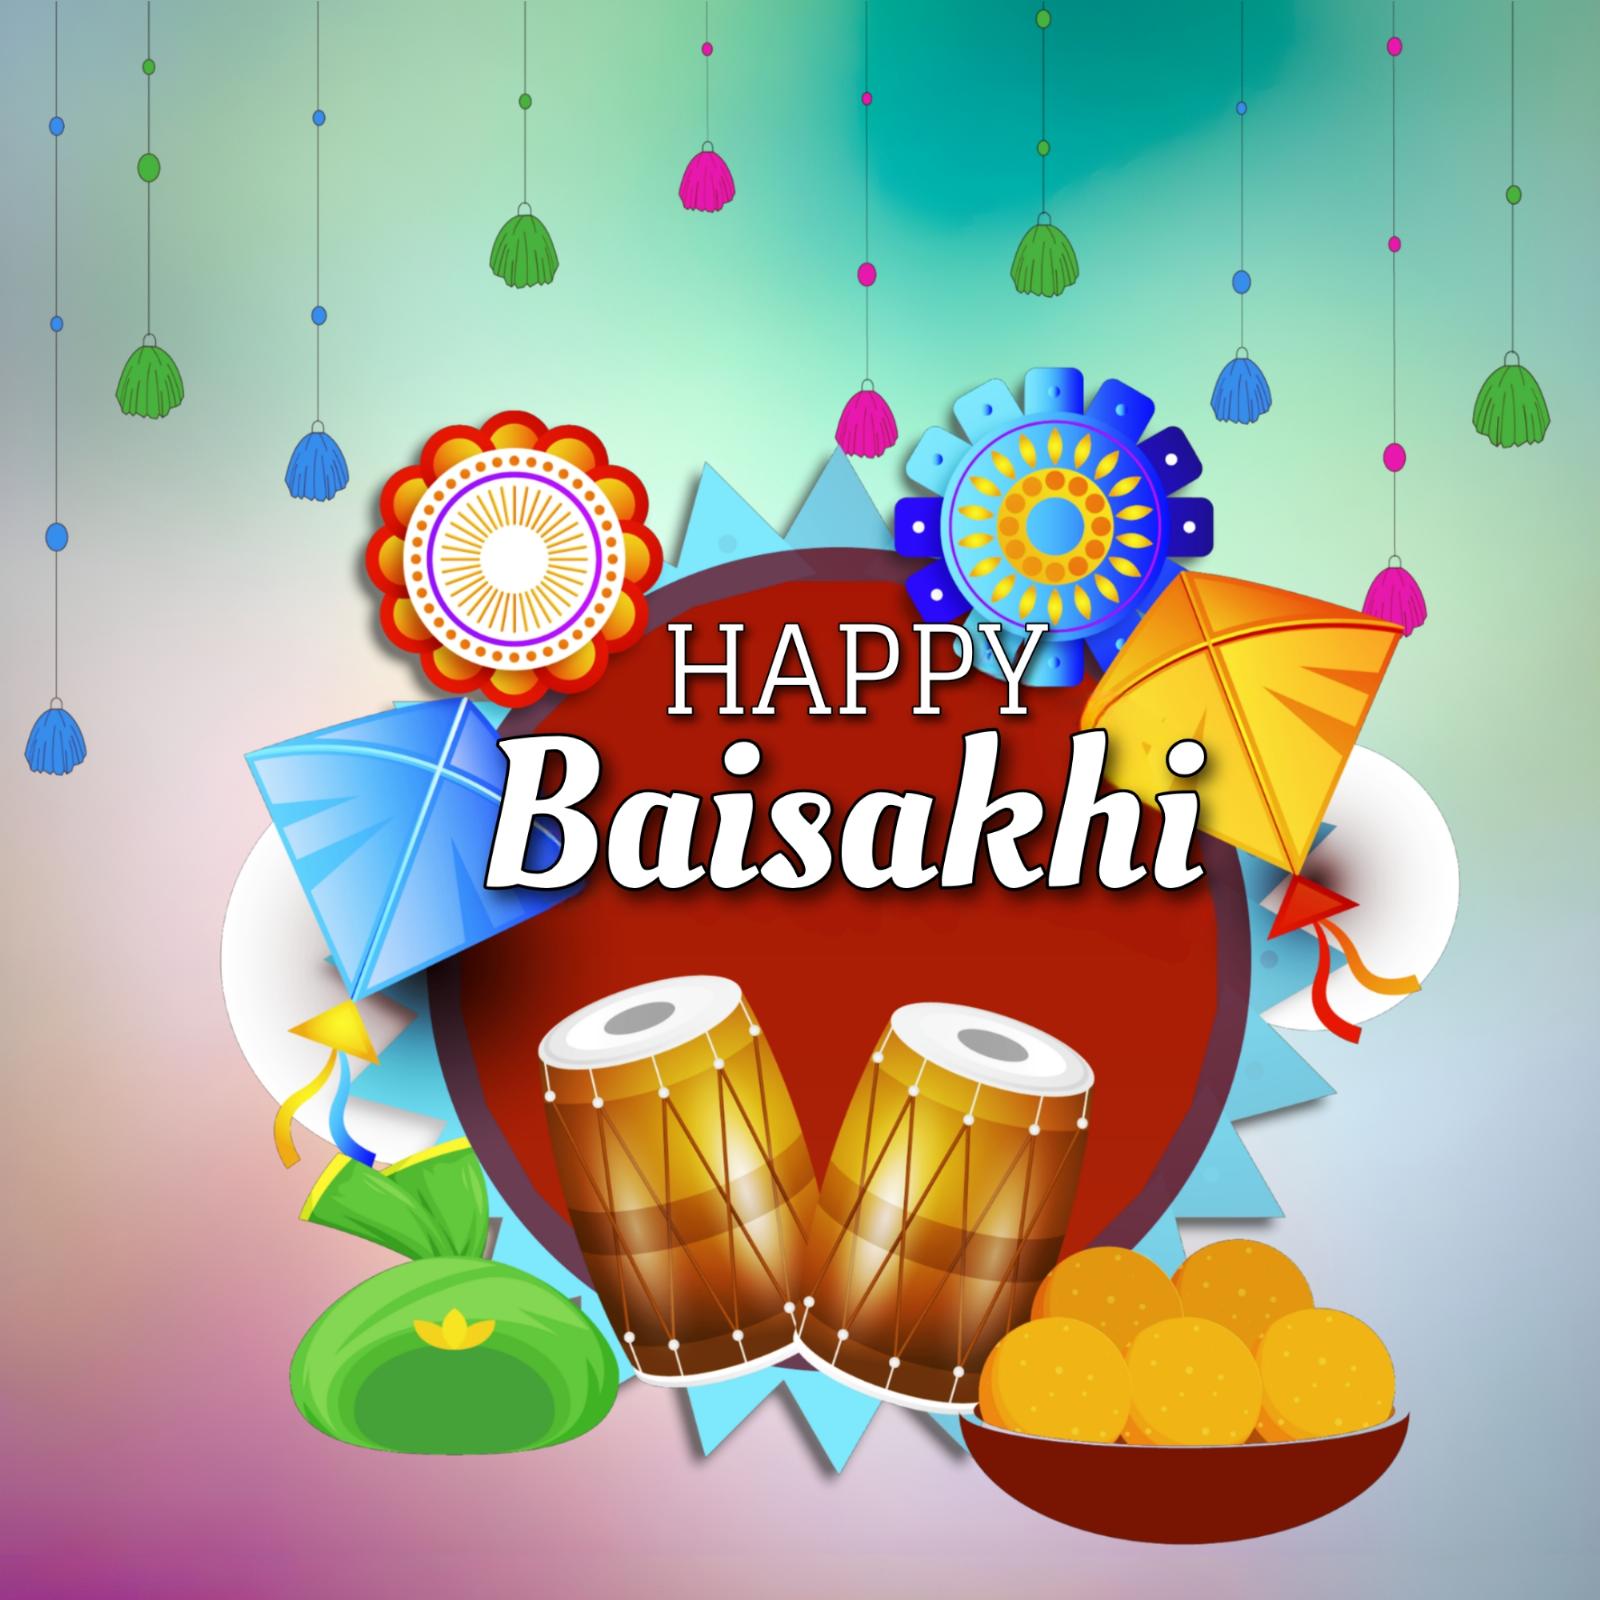 Happy Baisakhi Images Hd Download